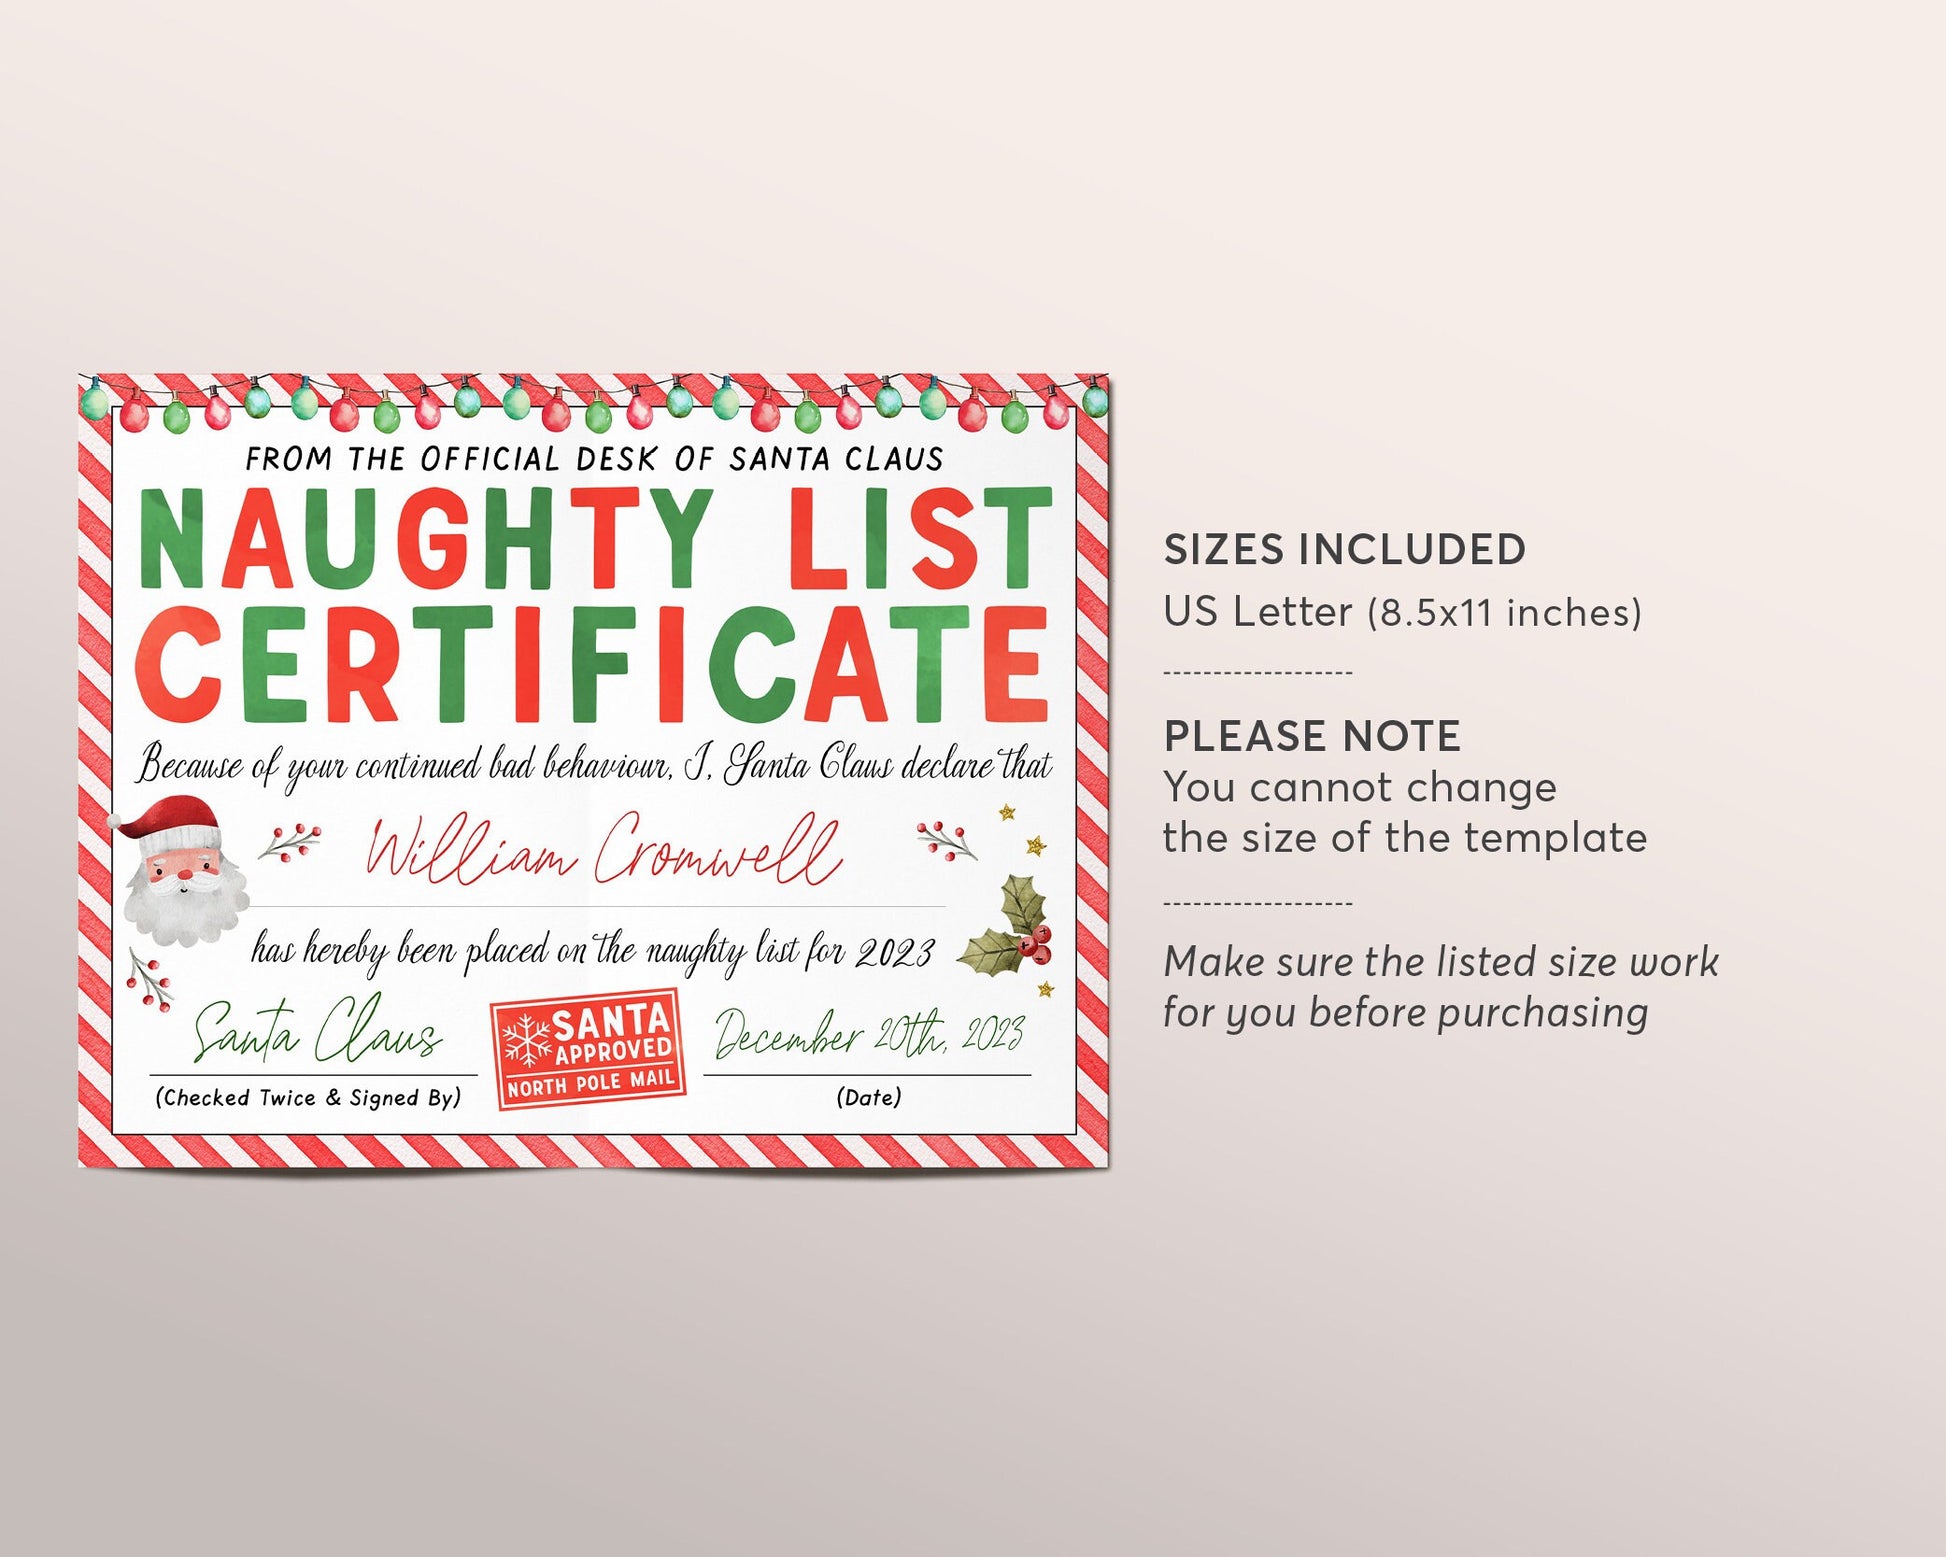 Naughty List Warning Notice from Santa - Free Printable